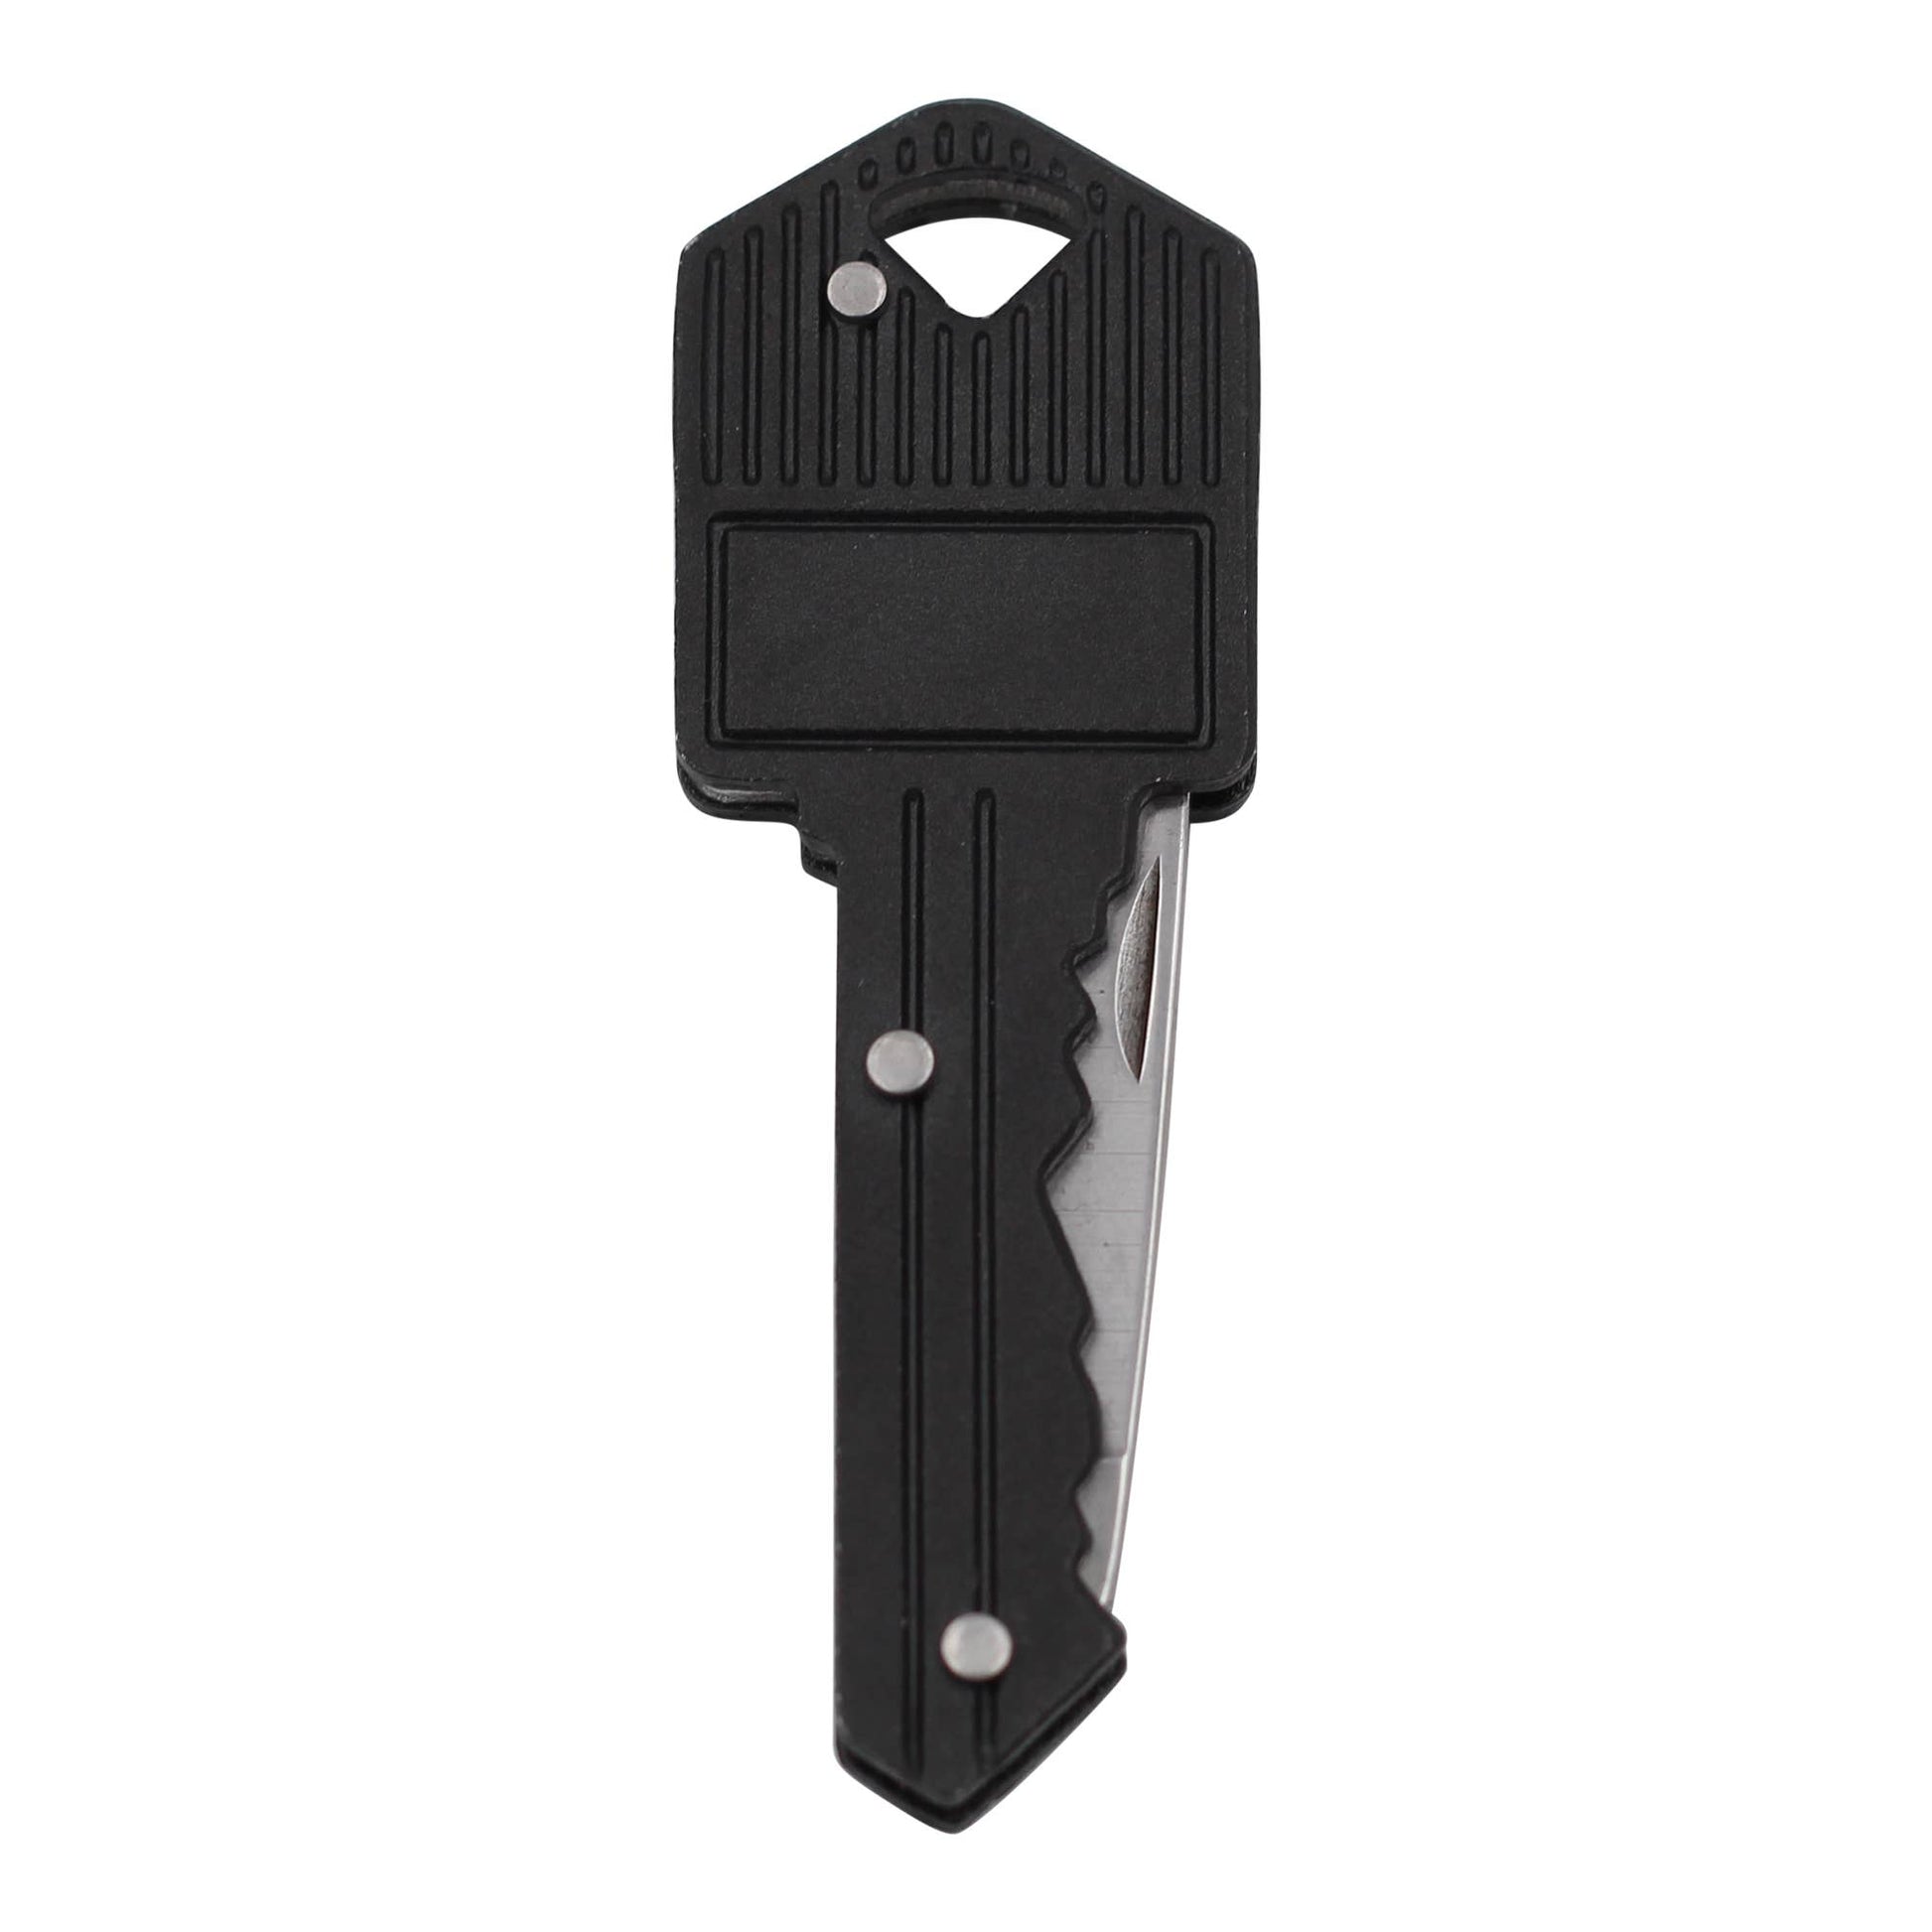 Image of Real Sic Black Key Knife Keychain – Small Utility Pocketknife - 2'' Blade